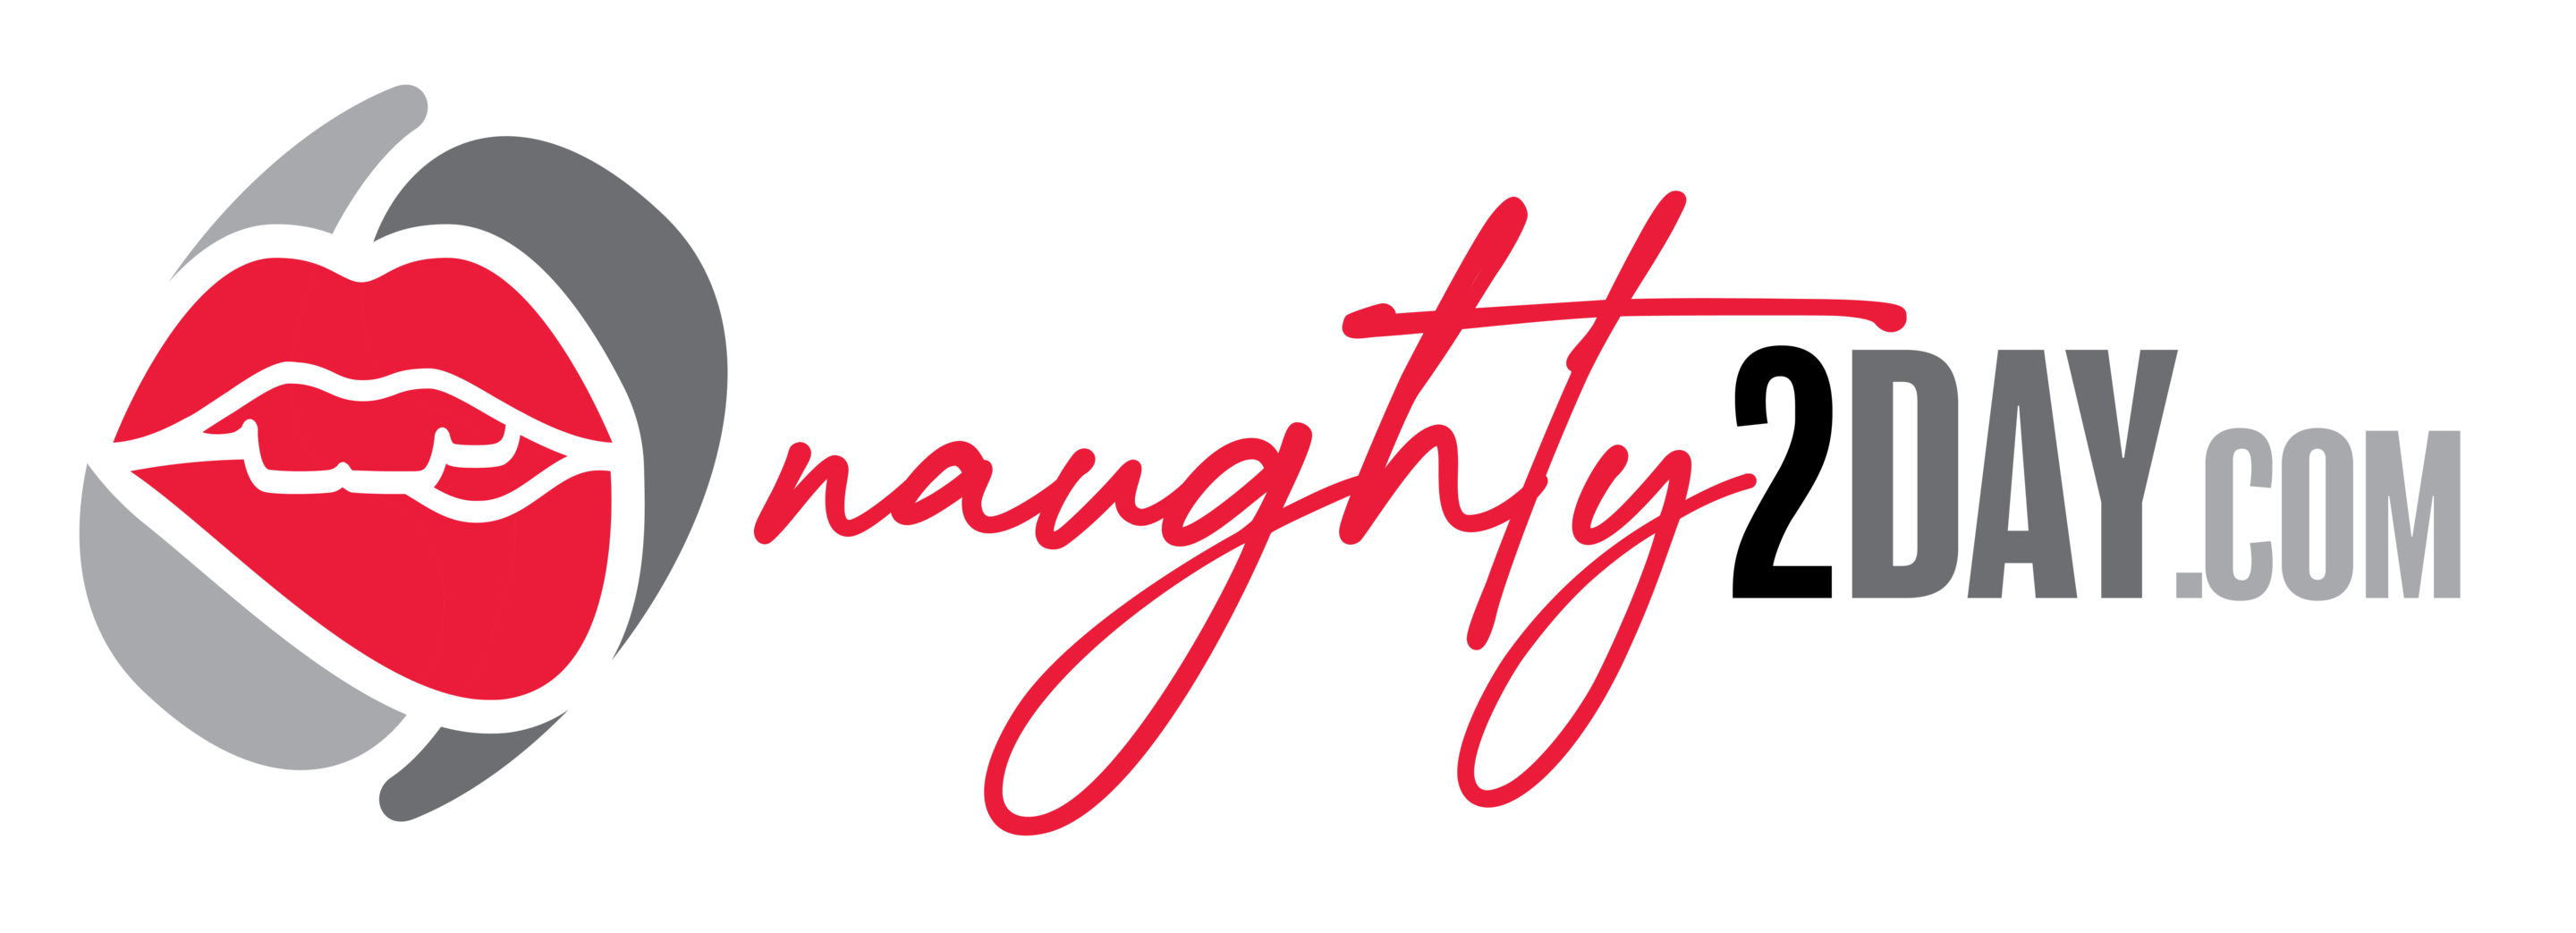 naughty2day.com